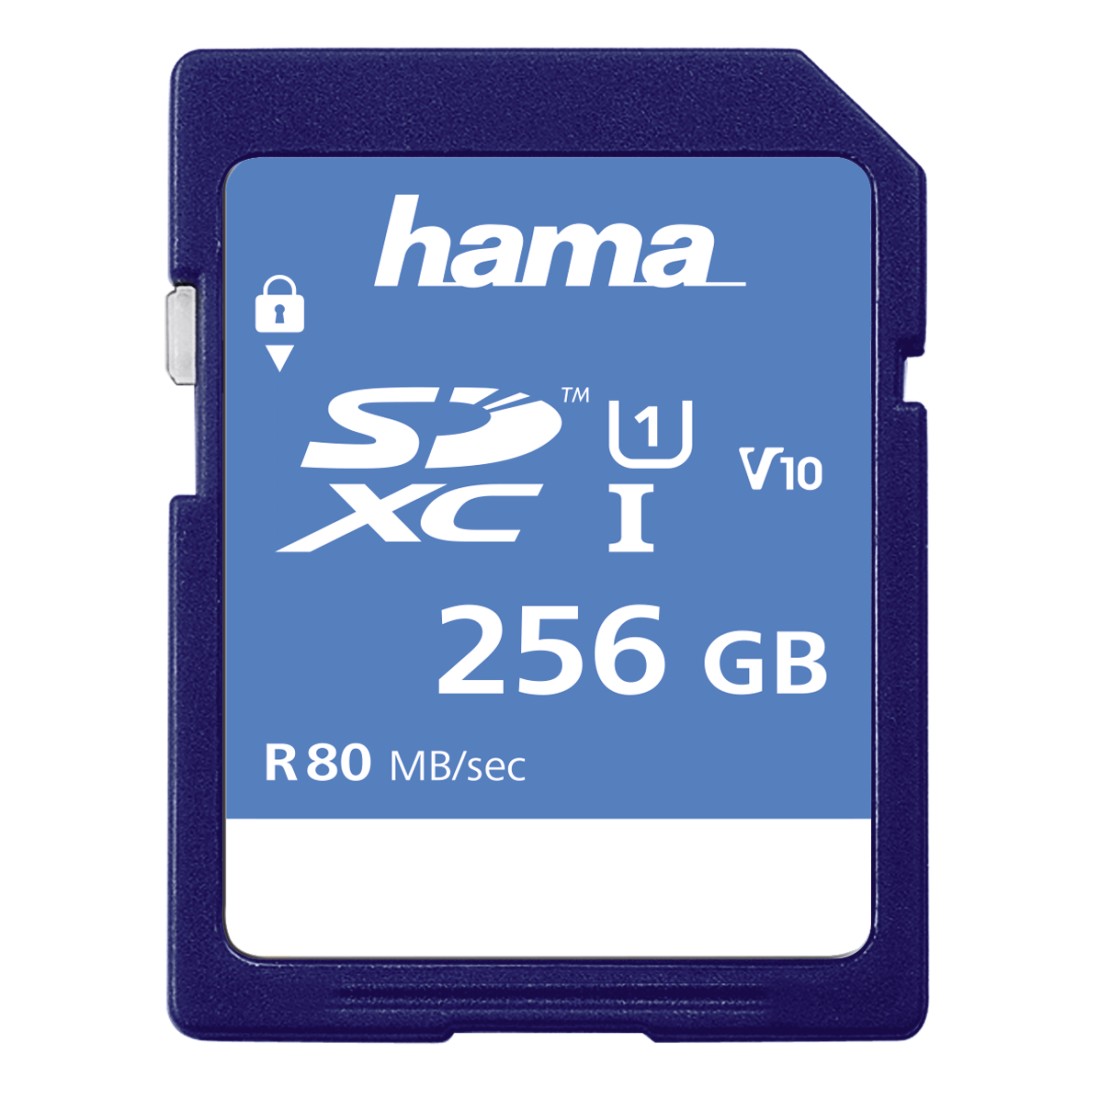 You Recently Viewed Hama 256GB Class 10 SDXC UHS-I 80MBs Image